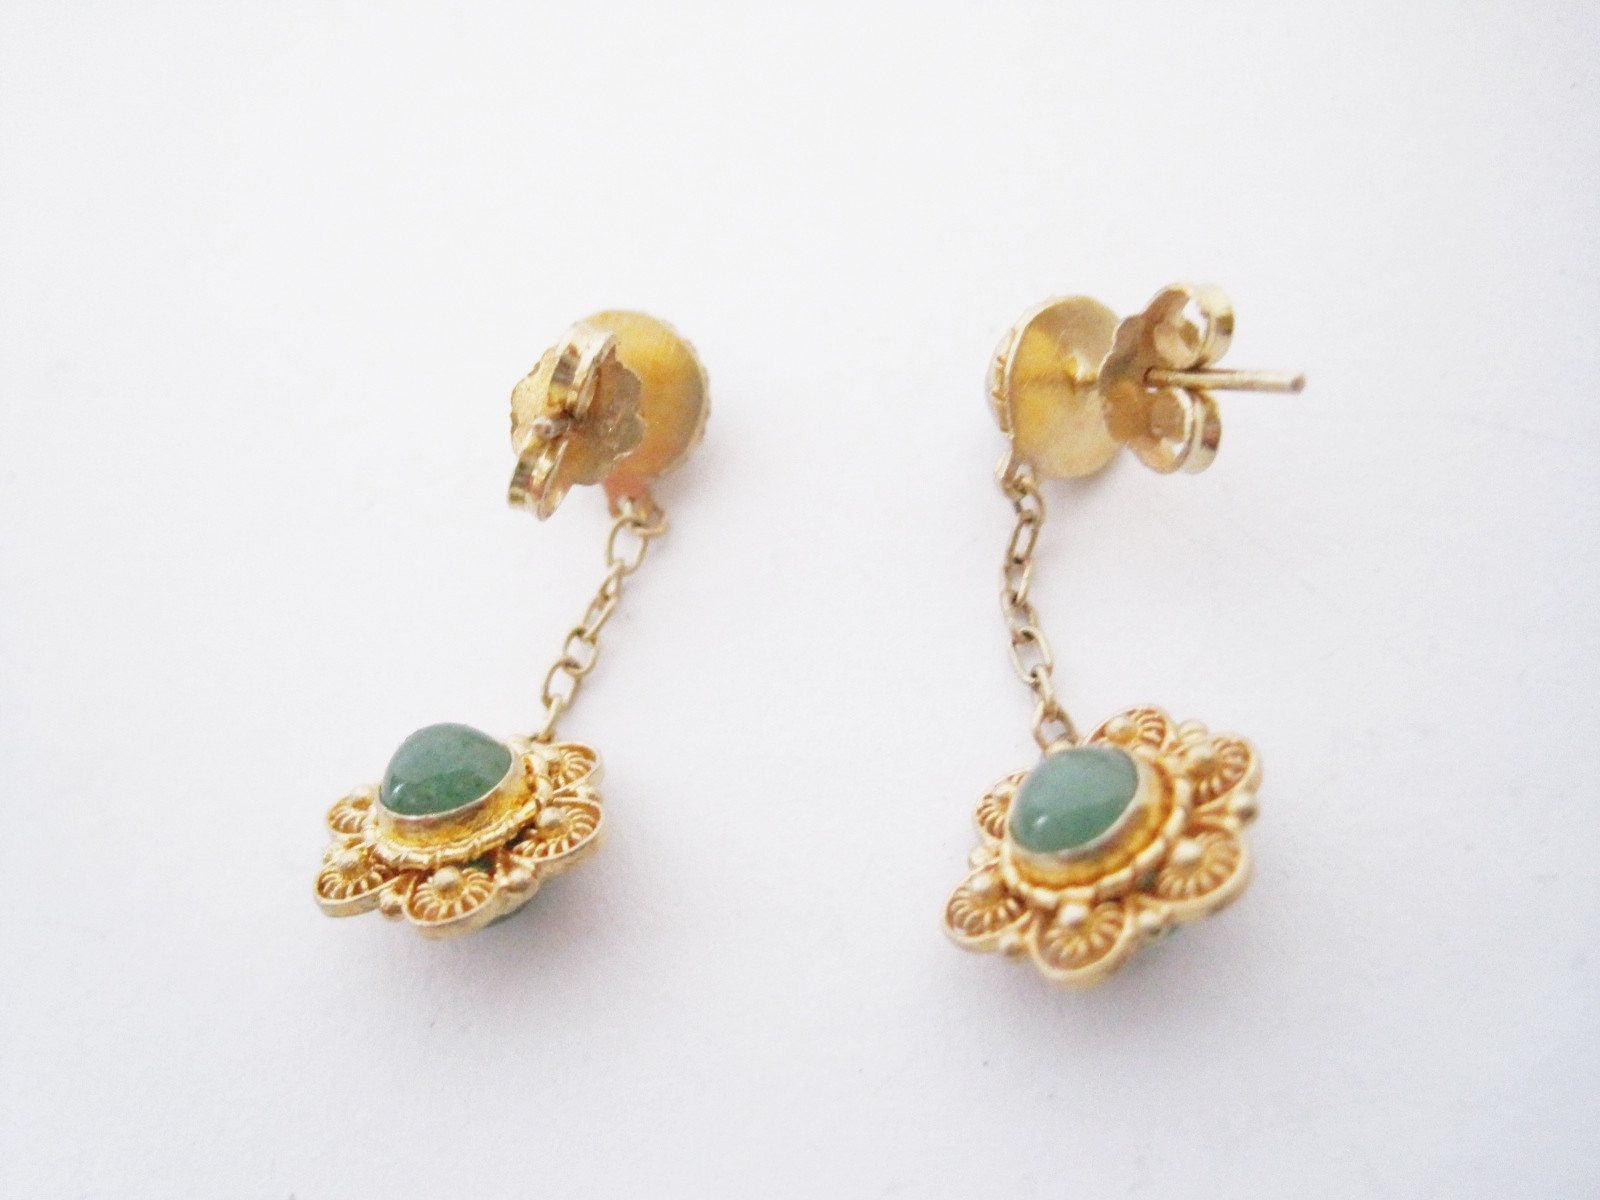 chinese export earrings